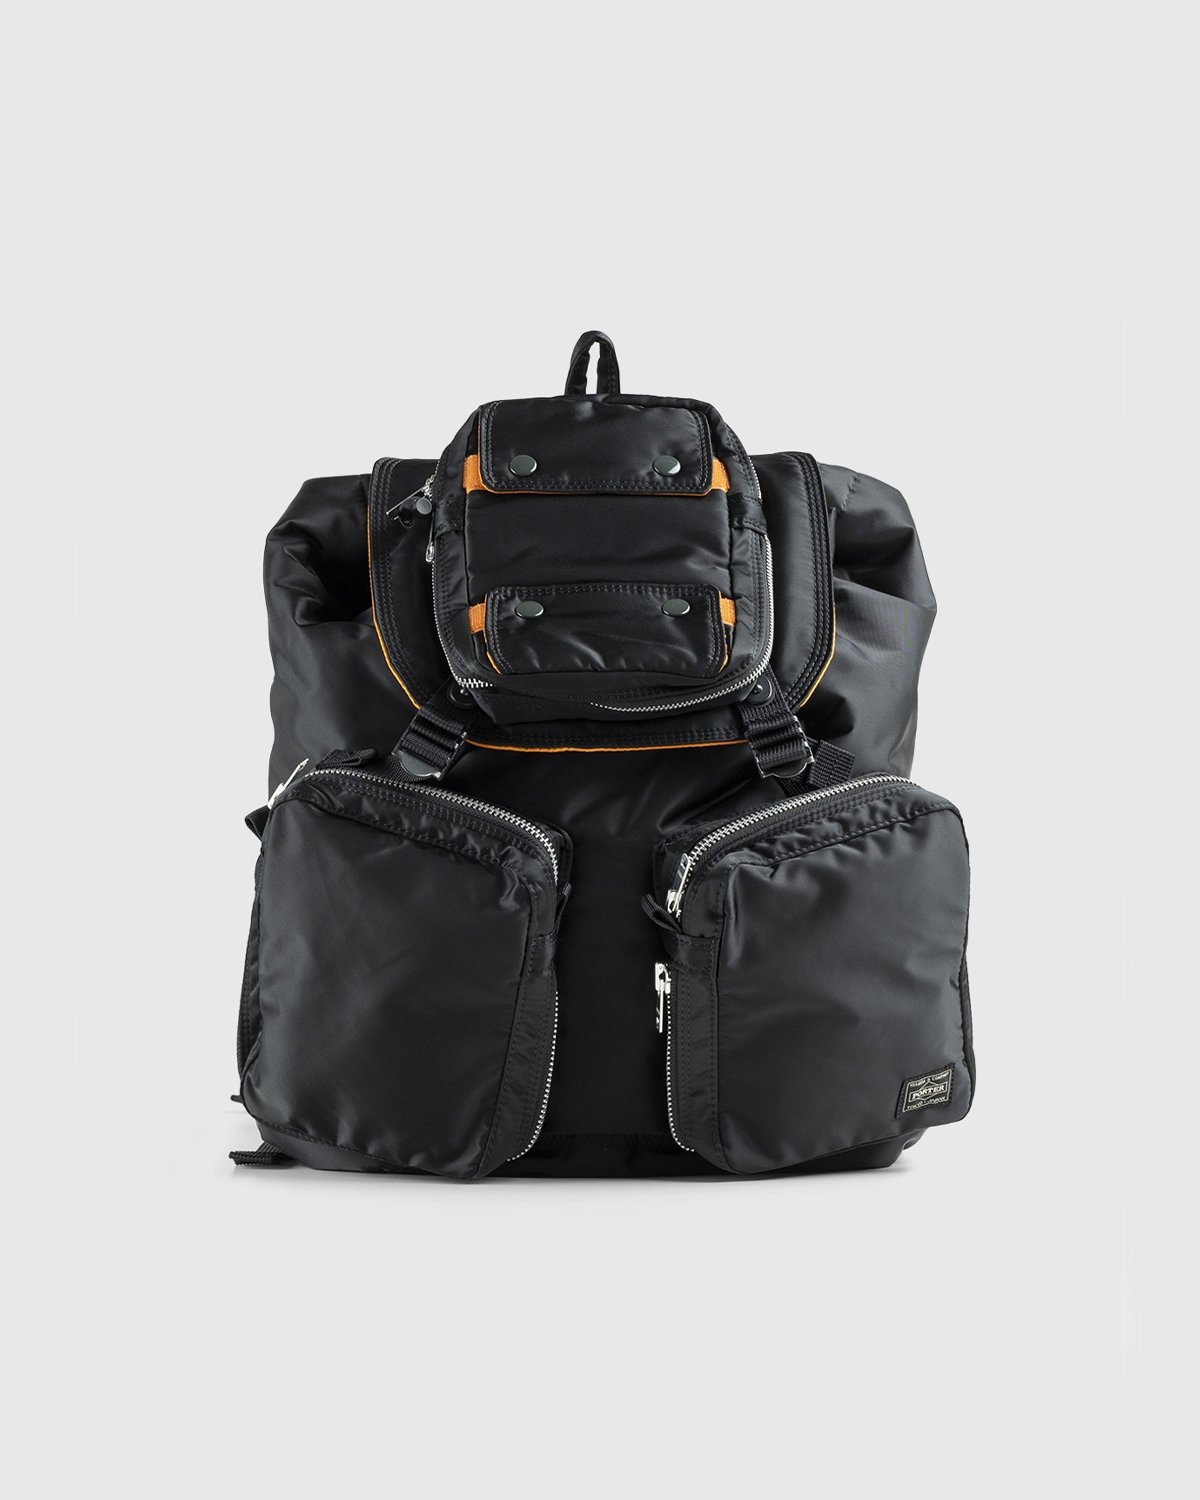 Porter-Yoshida & Co. – Rucksack Black - Bags - Black - Image 1